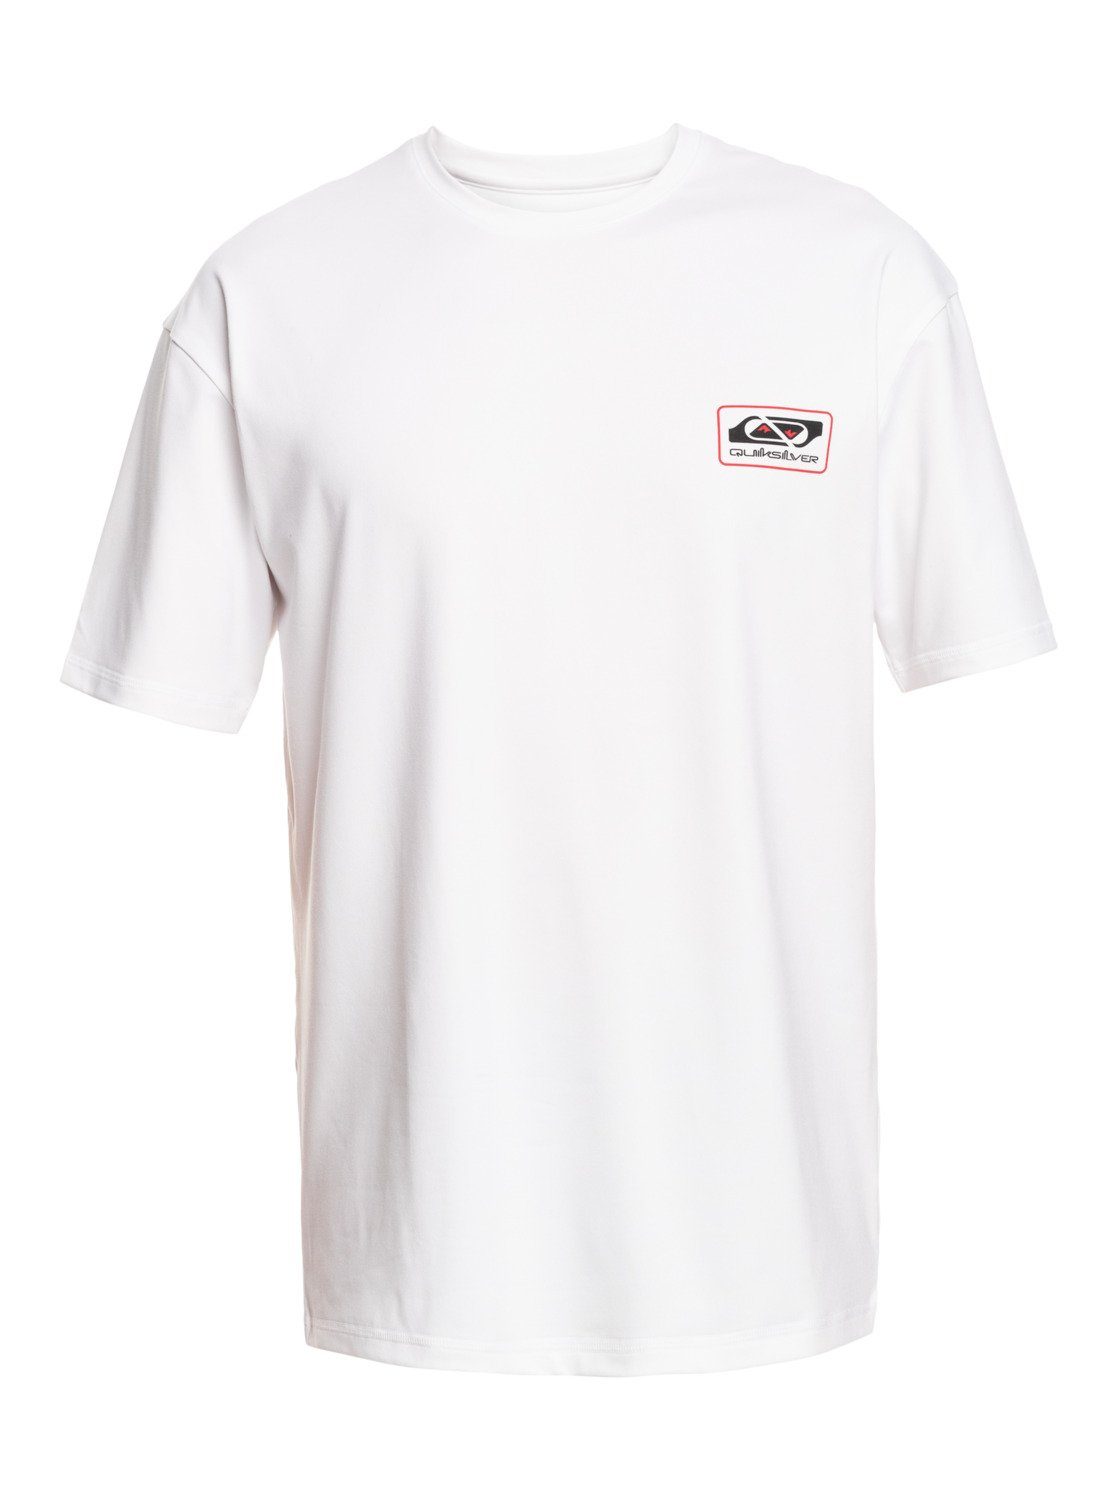 Neopren Surf White Mix Quiksilver Shirt